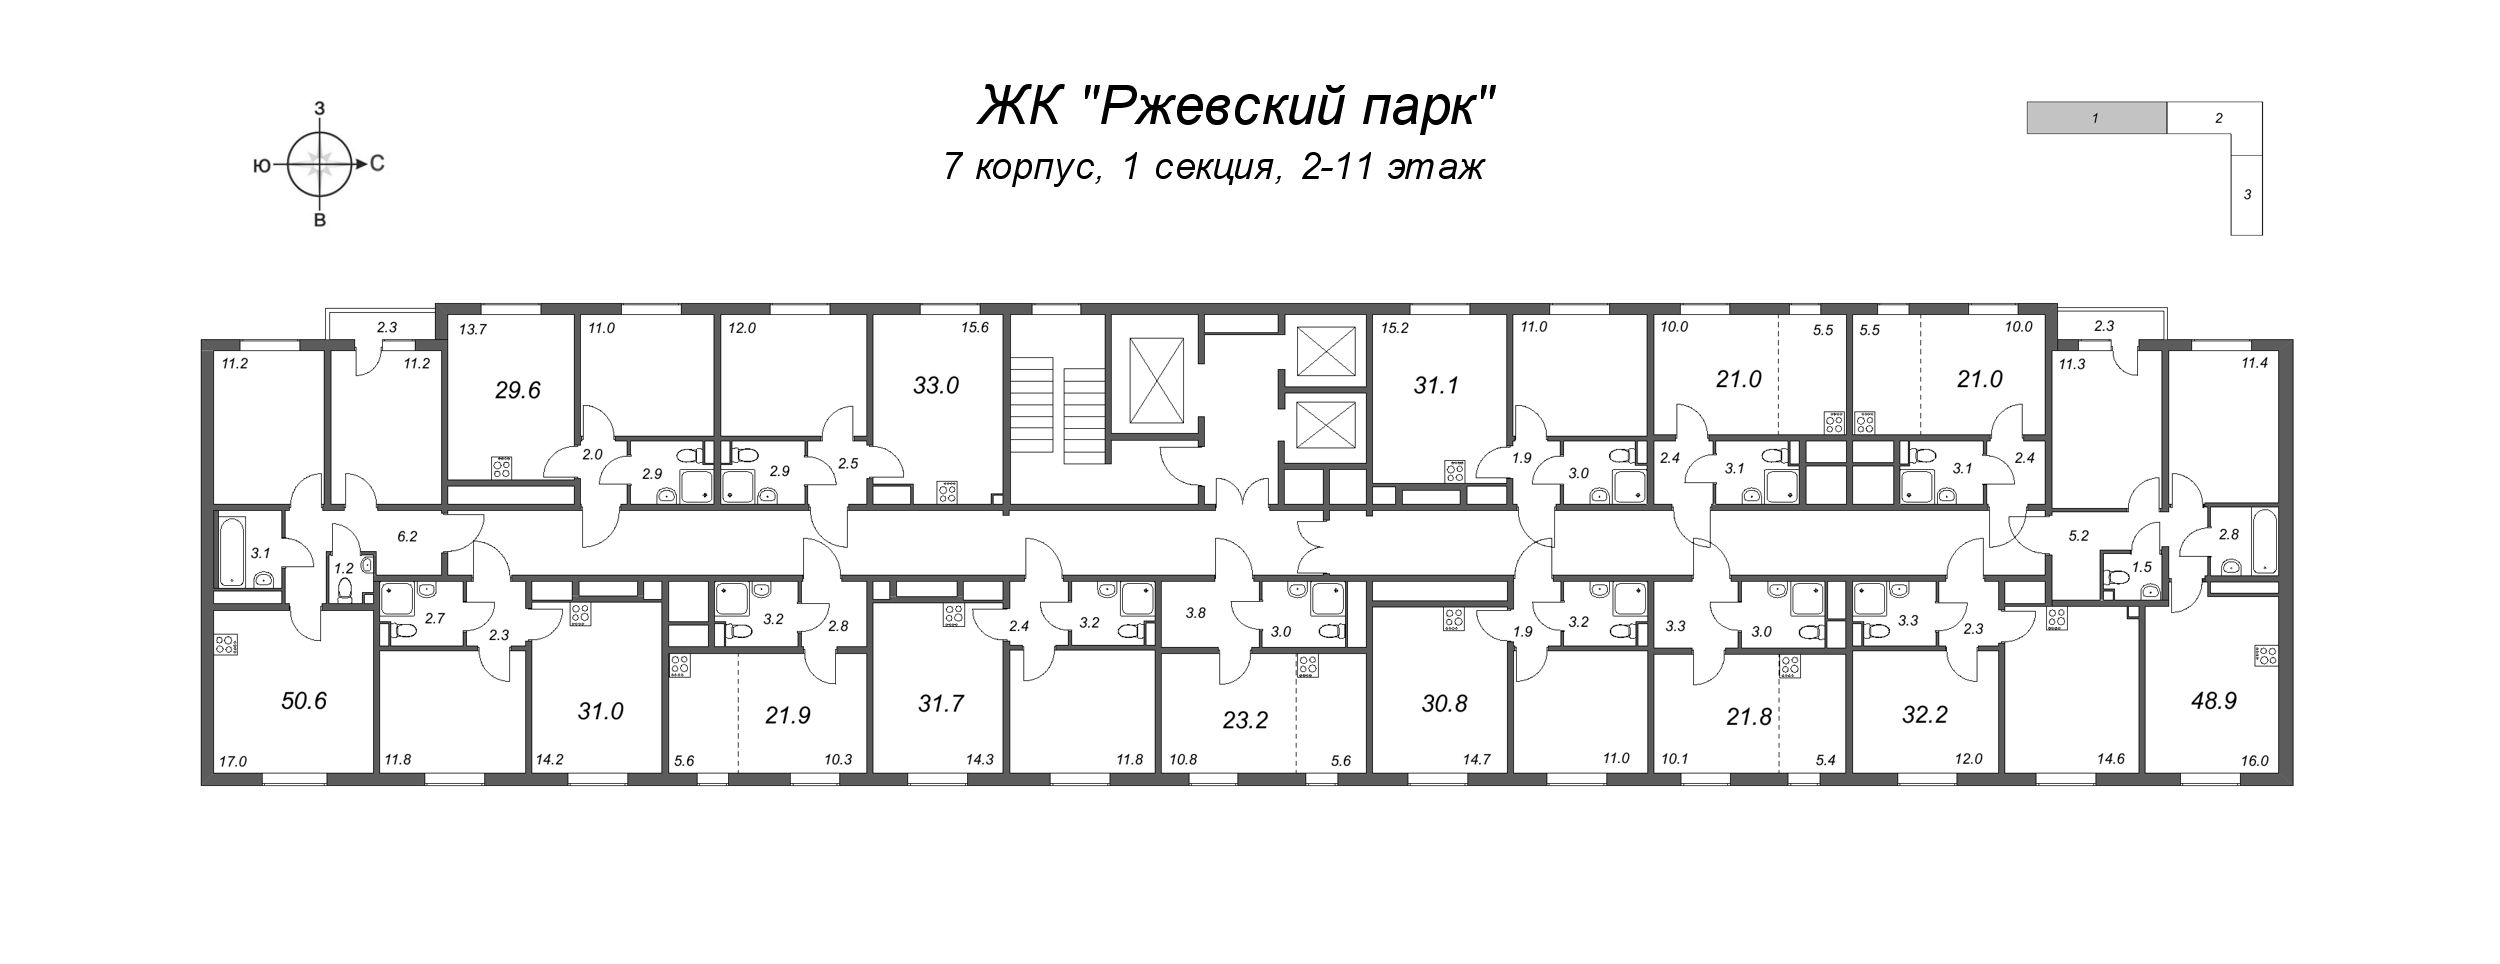 2-комнатная (Евро) квартира, 33 м² - планировка этажа